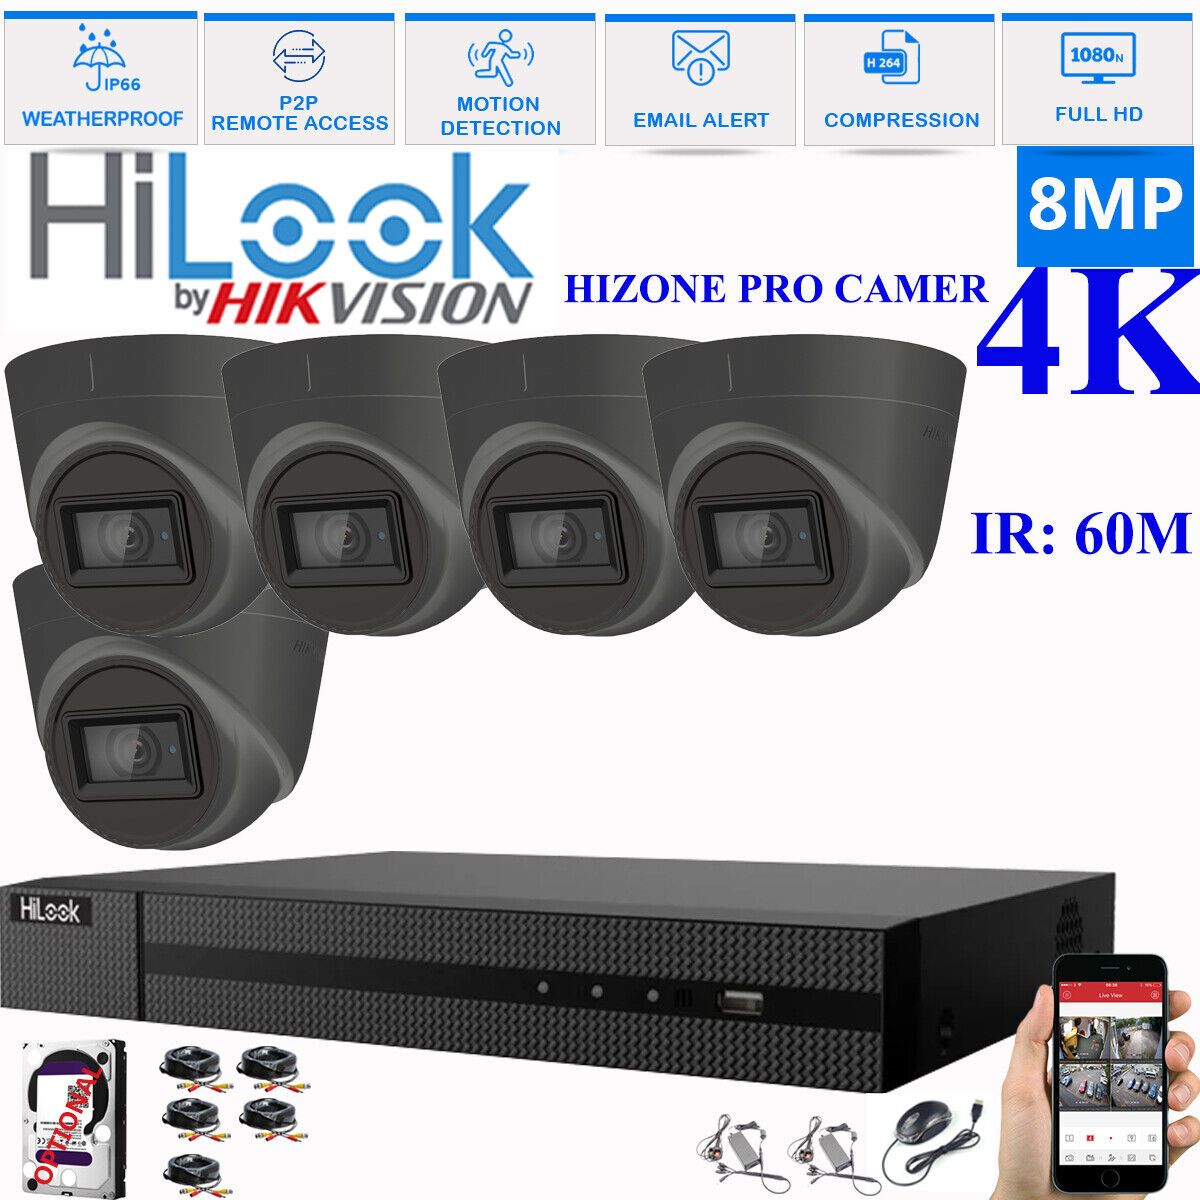 HIKVISION 8MP 4K CCTV HD DVR SYSTEM IN/OUTDOOR IR 60M CAMERA SECURITY KIT 8CH DVR 5xCameras (gray) 3TB HDD